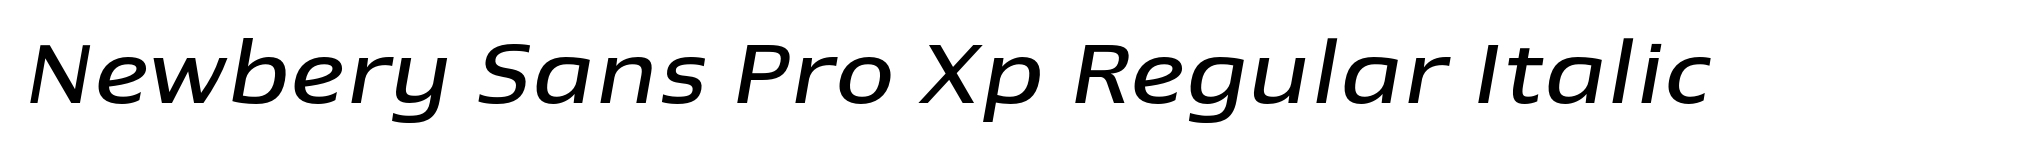 Newbery Sans Pro Xp Regular Italic image